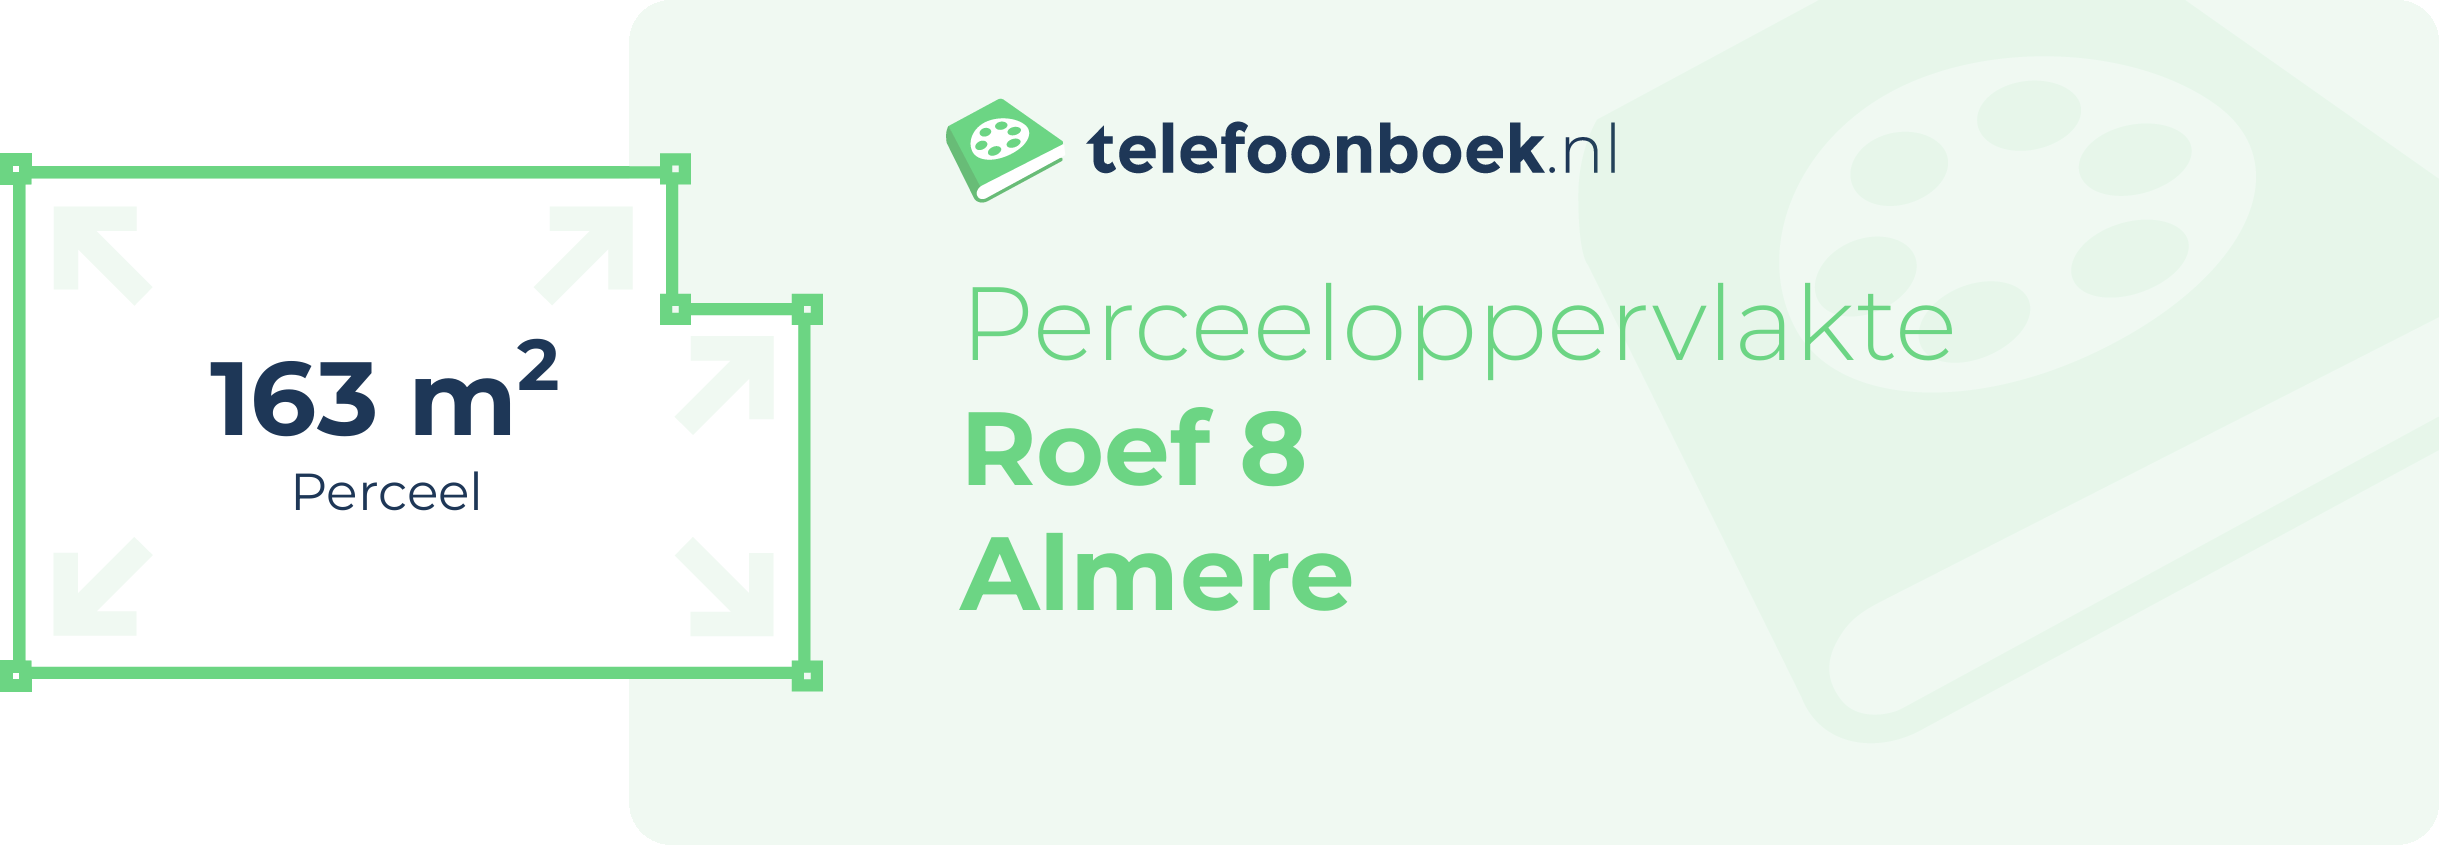 Perceeloppervlakte Roef 8 Almere